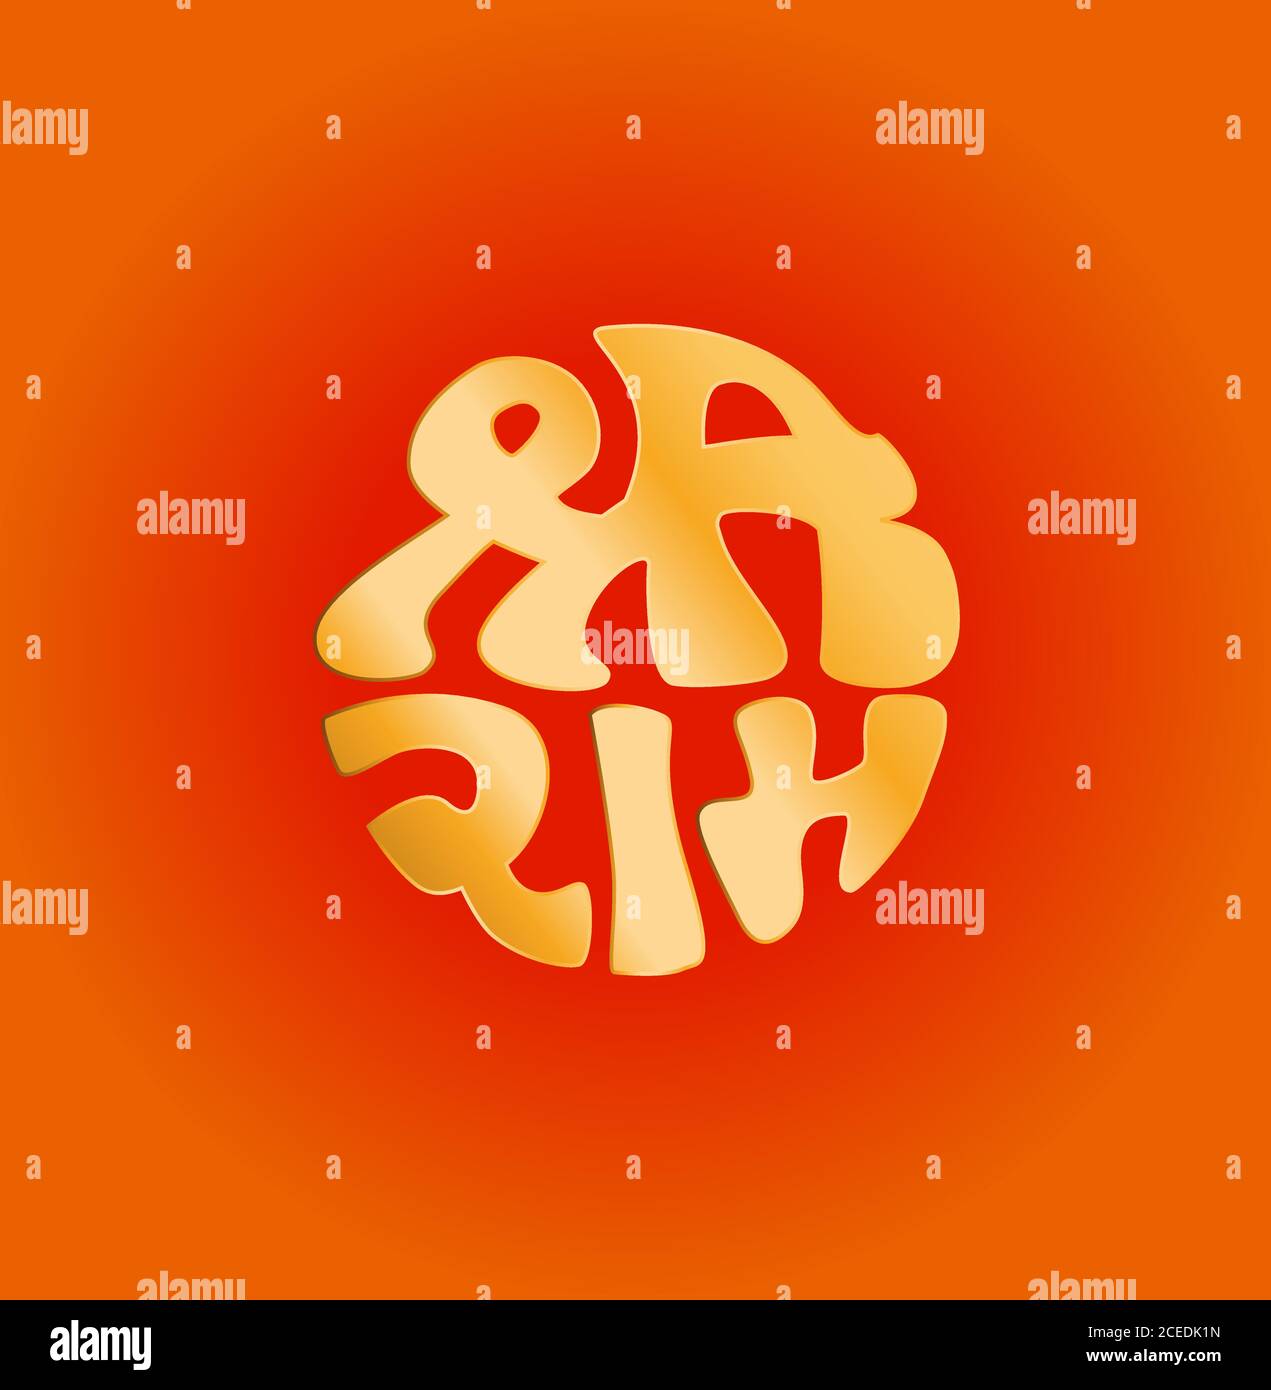 Shri Ram Typography Stock Vector